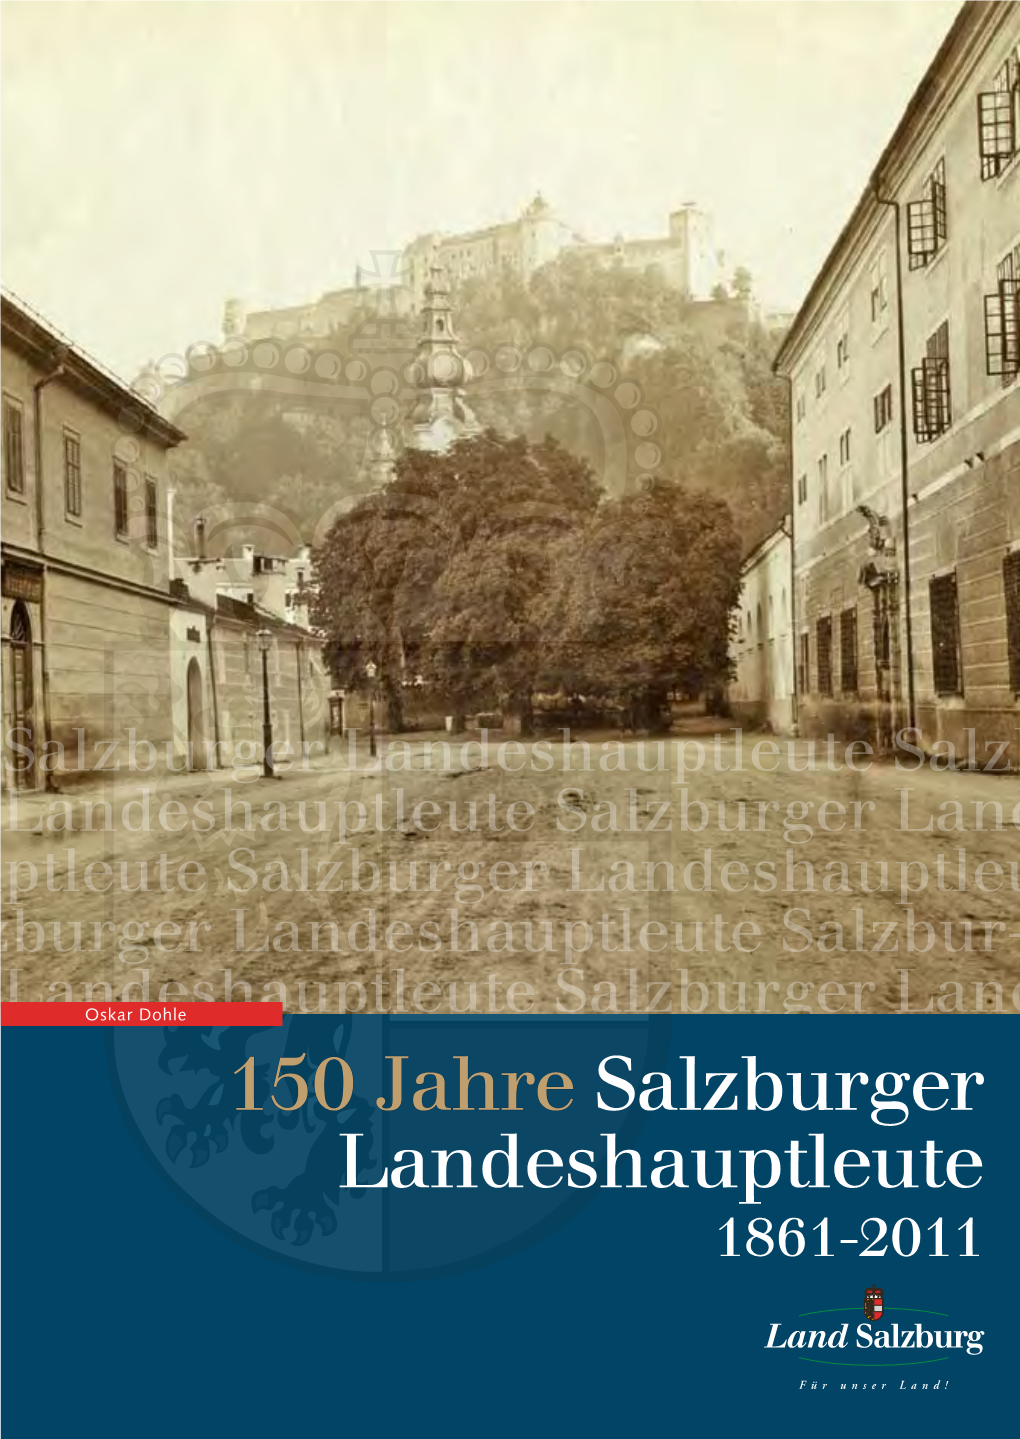 150 Jahre Salzburger Landeshauptleute 1861-2011